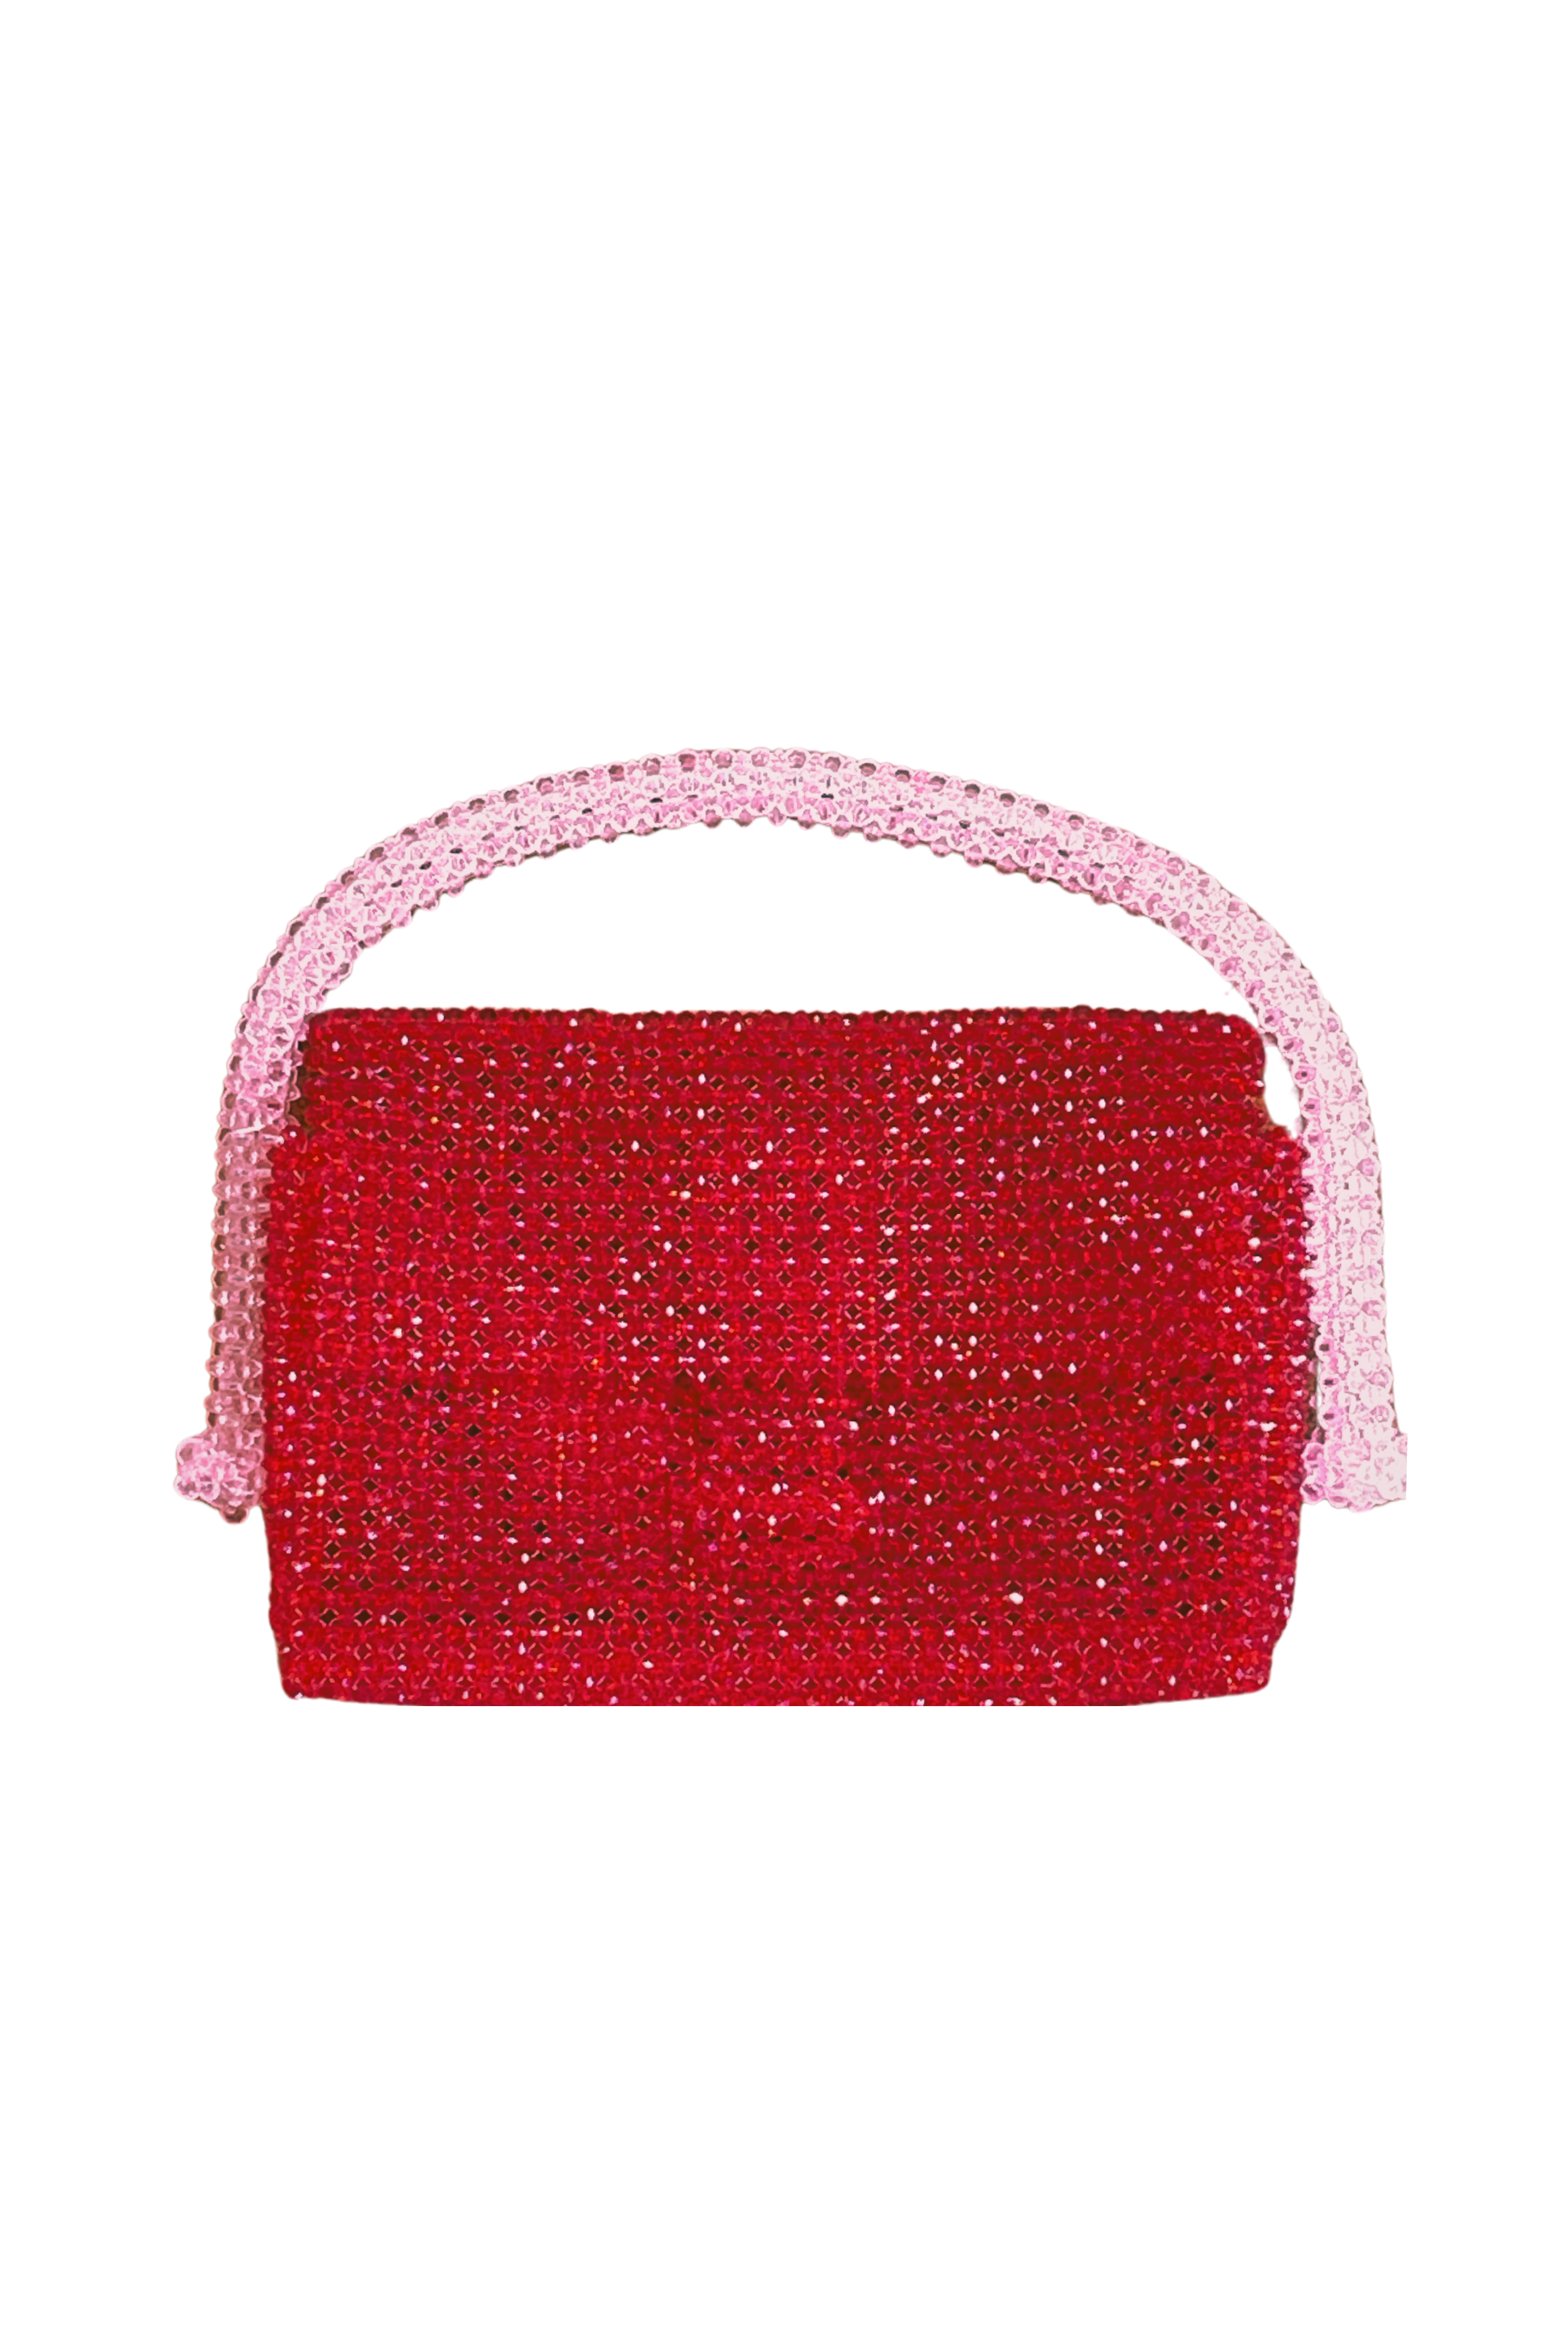 Exclusive Beaded Classic Handbag in Red